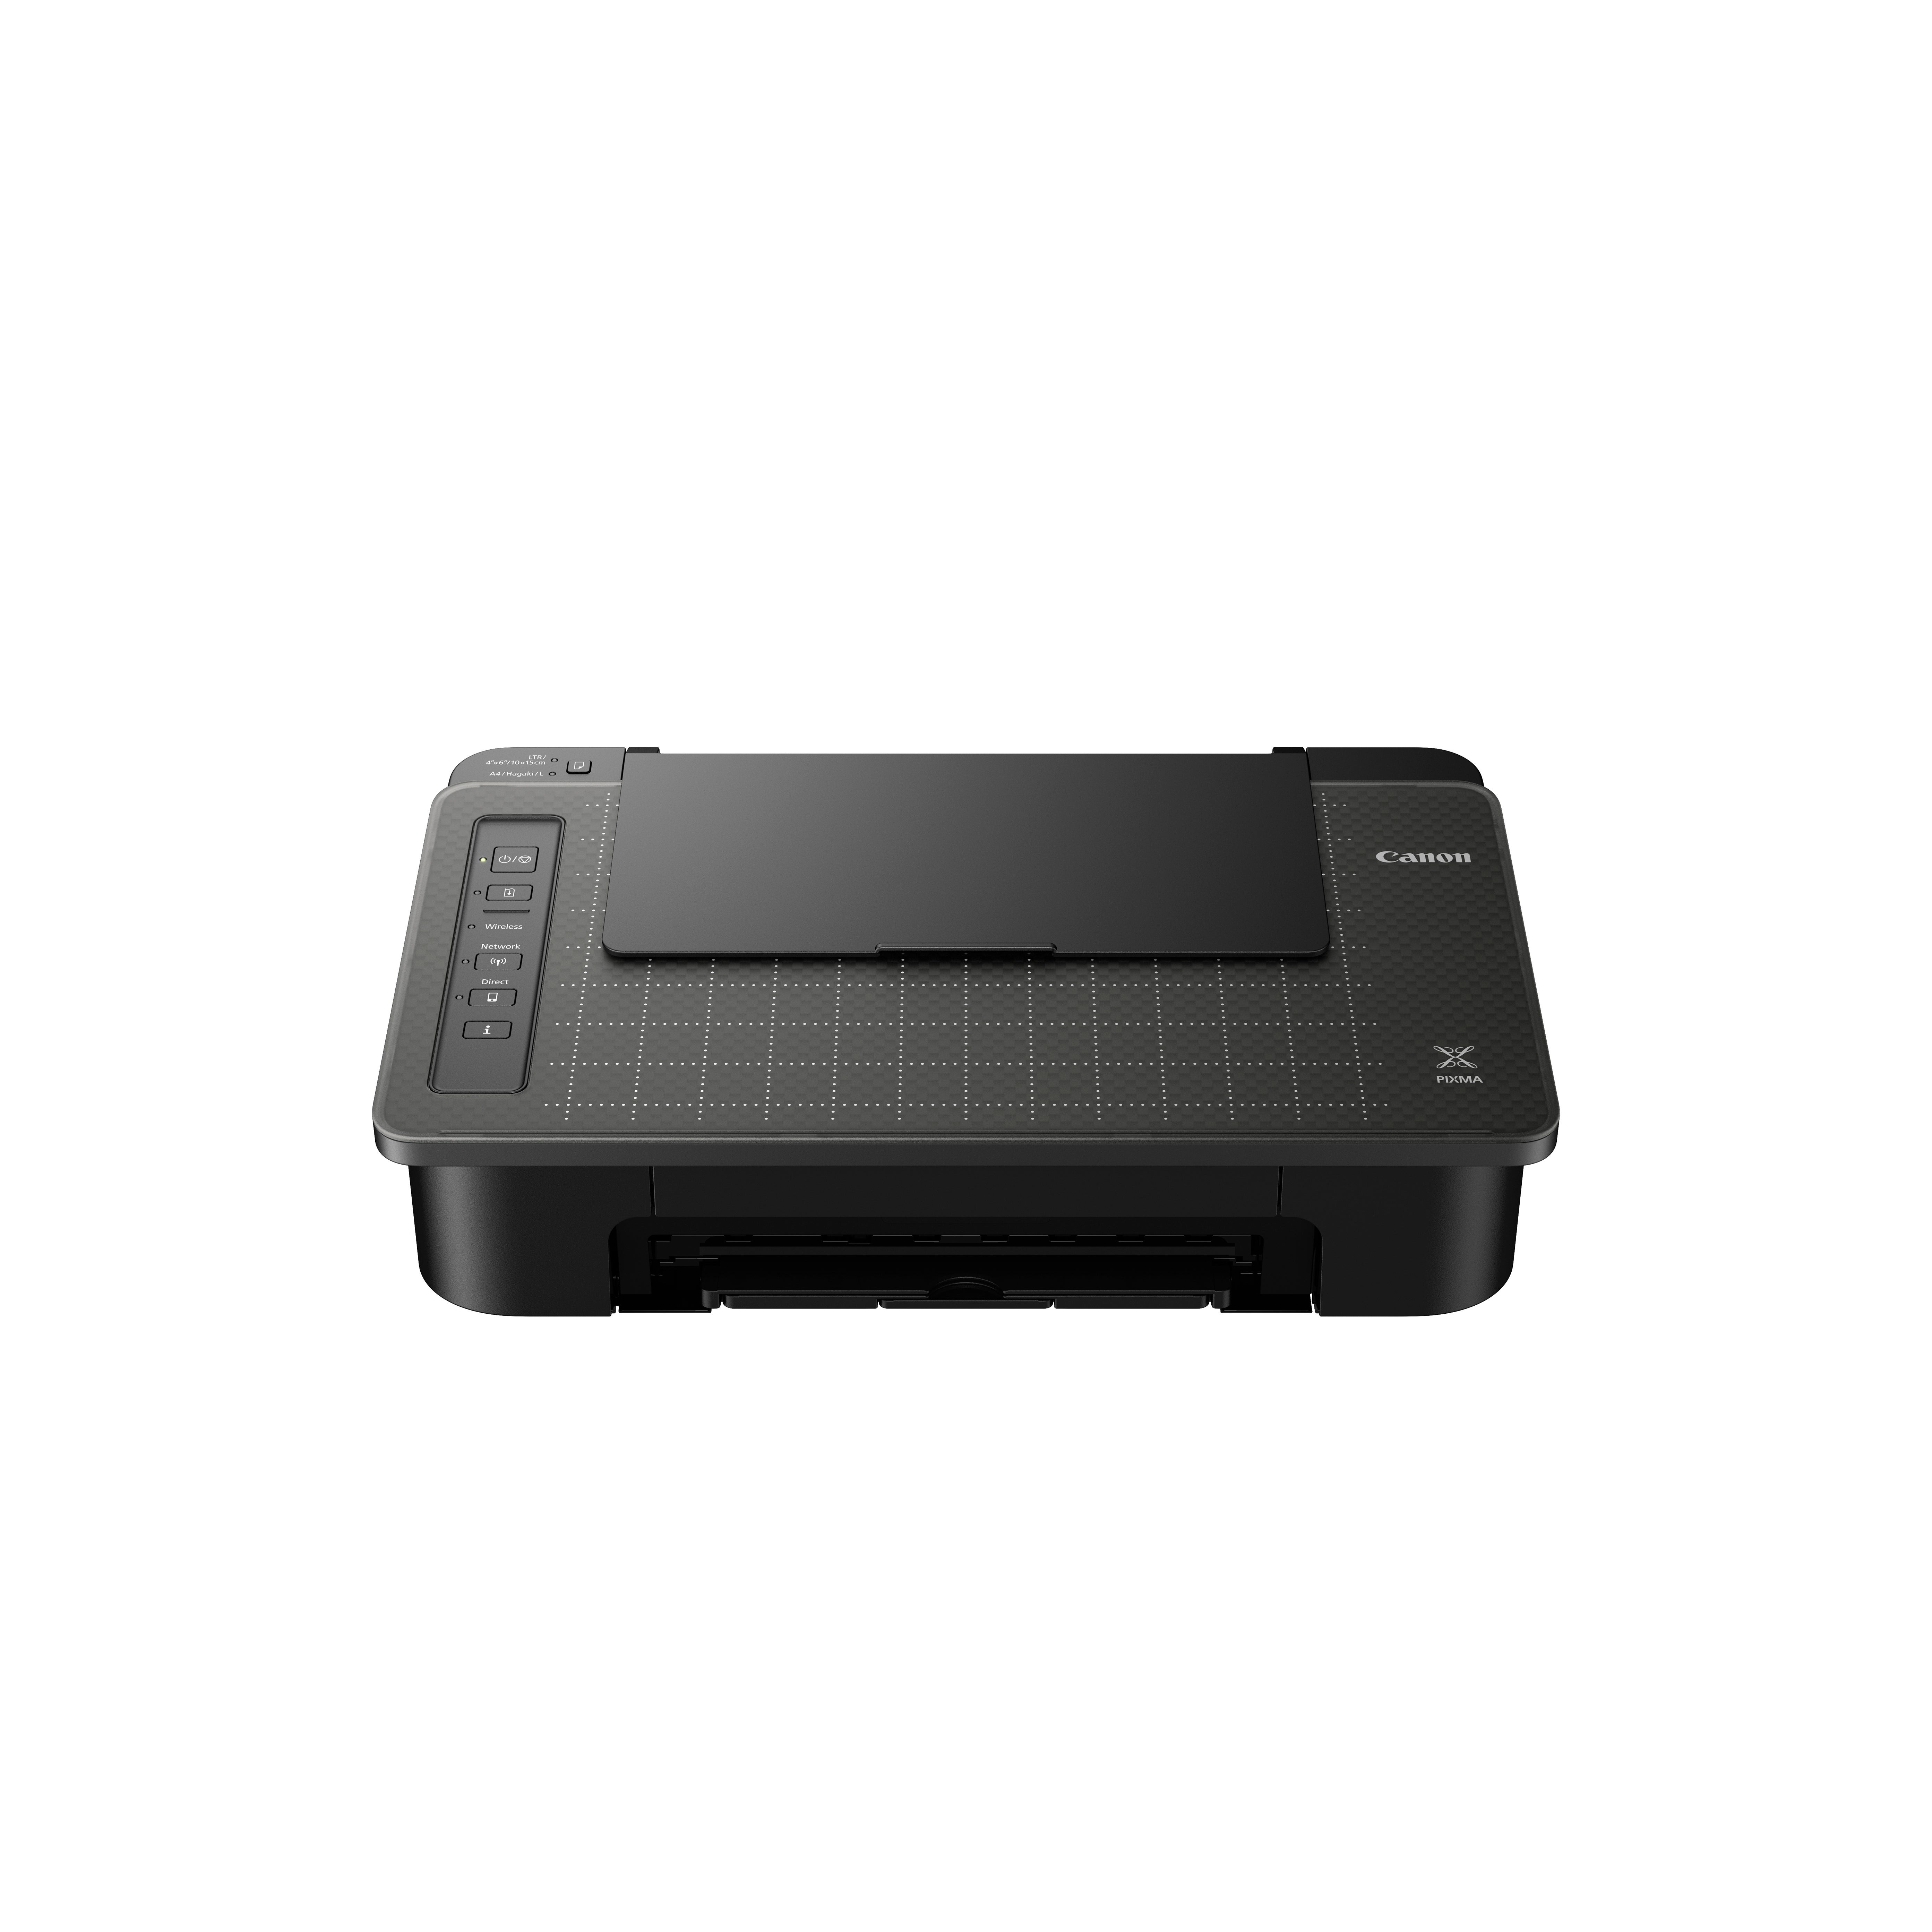 Pixma TS302 Wireless Printer Black